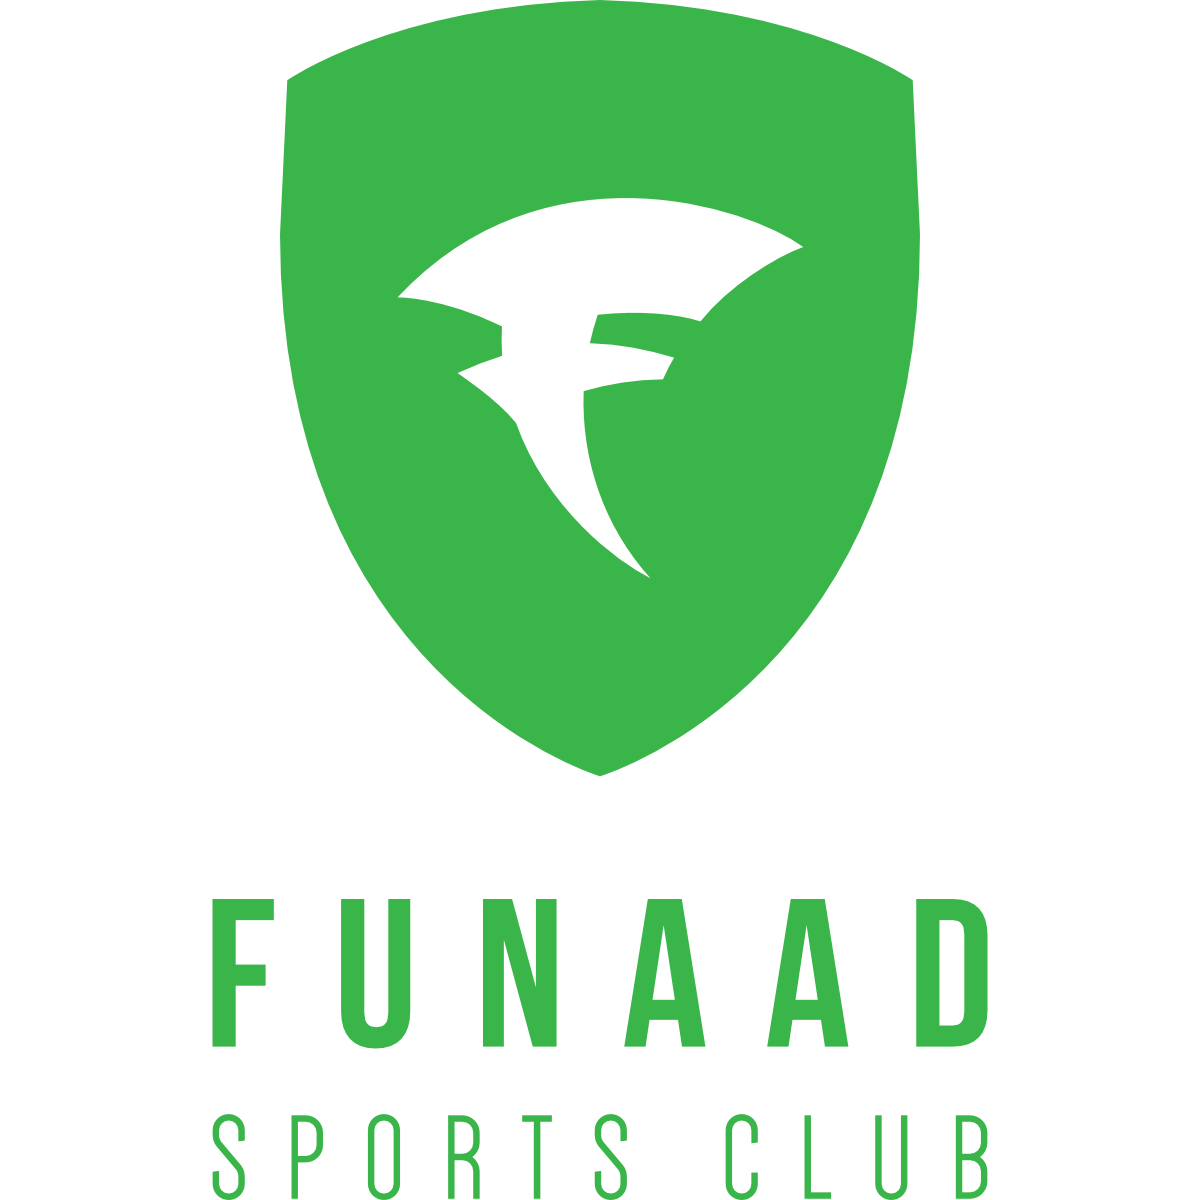 Funaad Sports Club